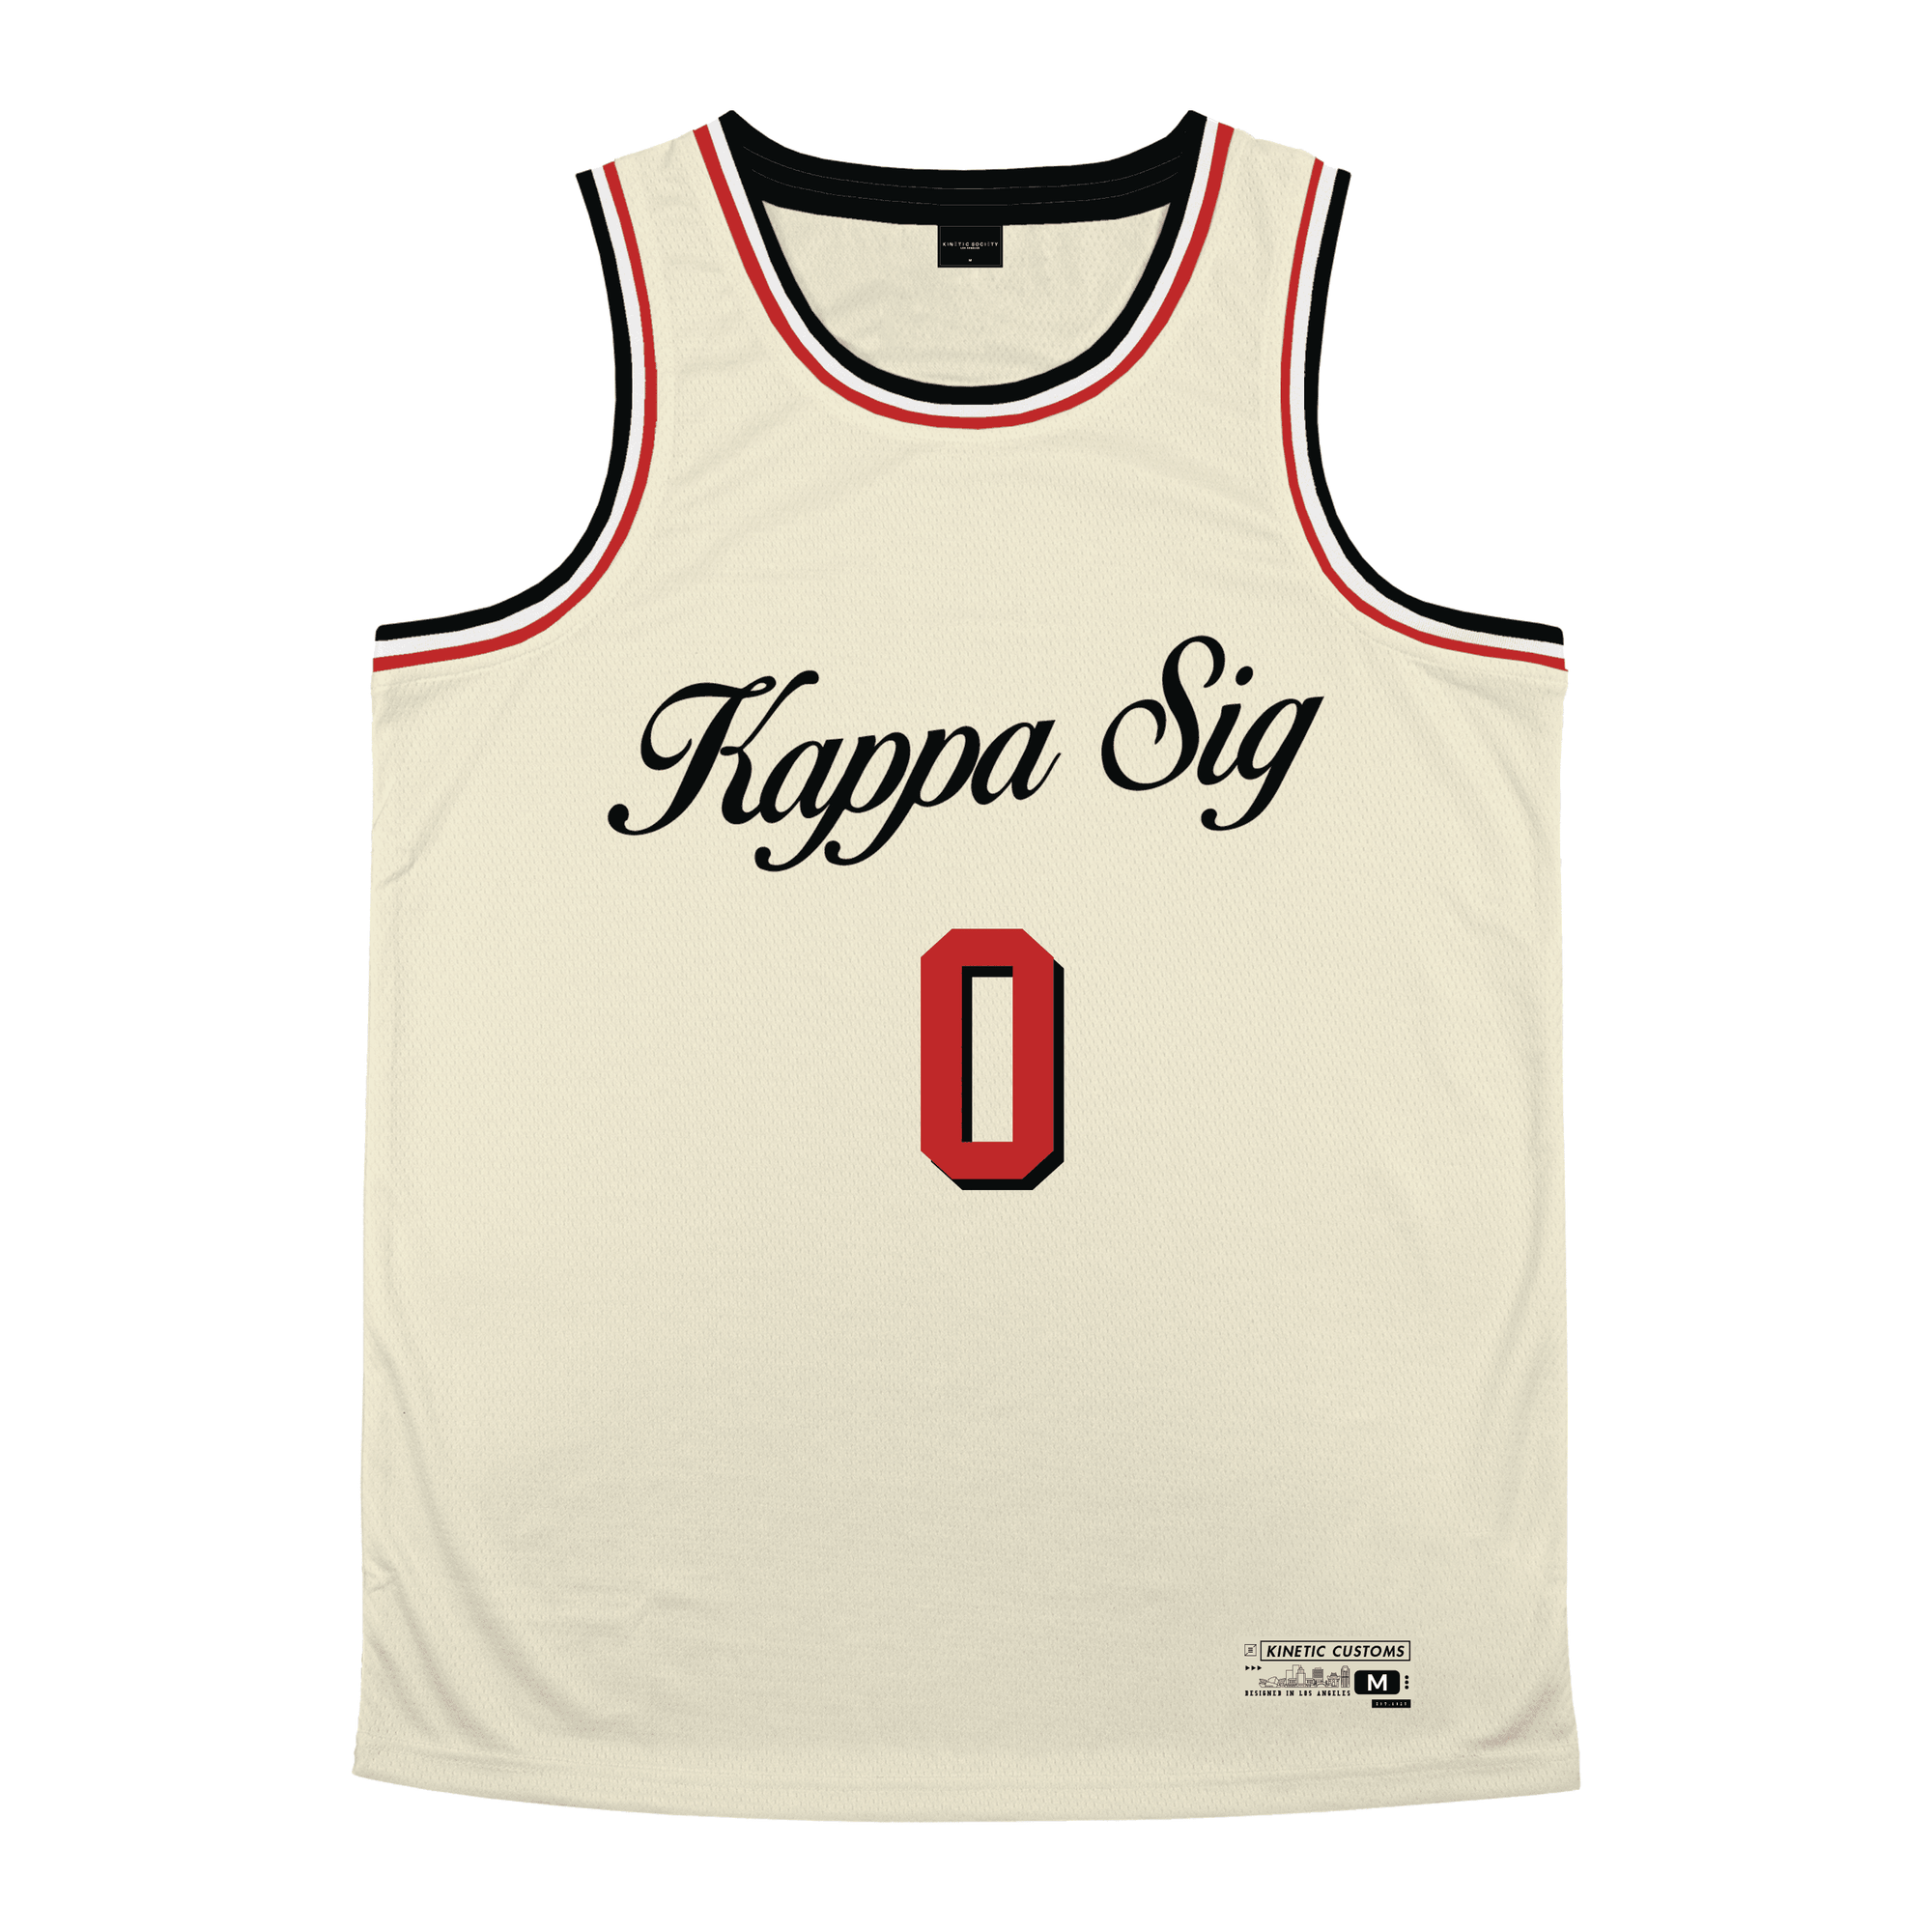 Kappa Sigma - VIntage Cream Basketball Jersey